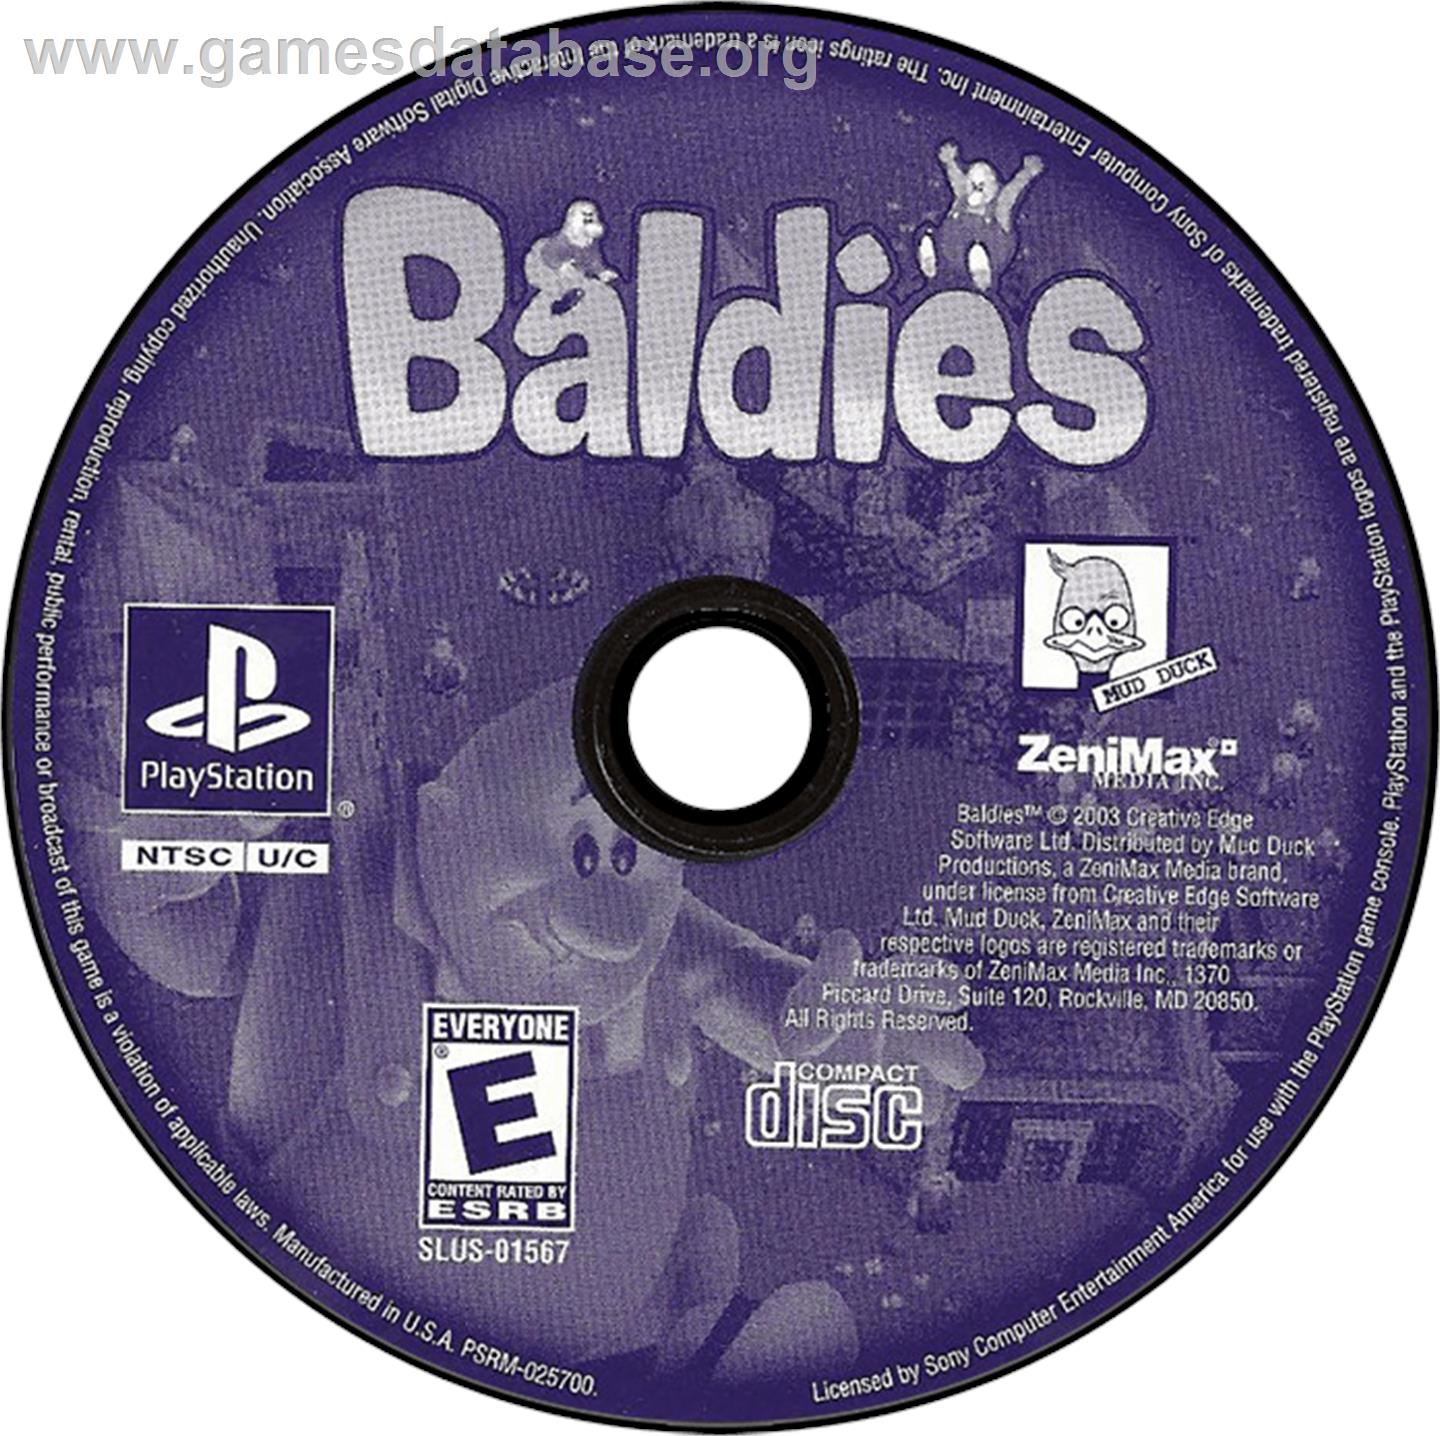 Baldies - Sony Playstation - Artwork - Disc